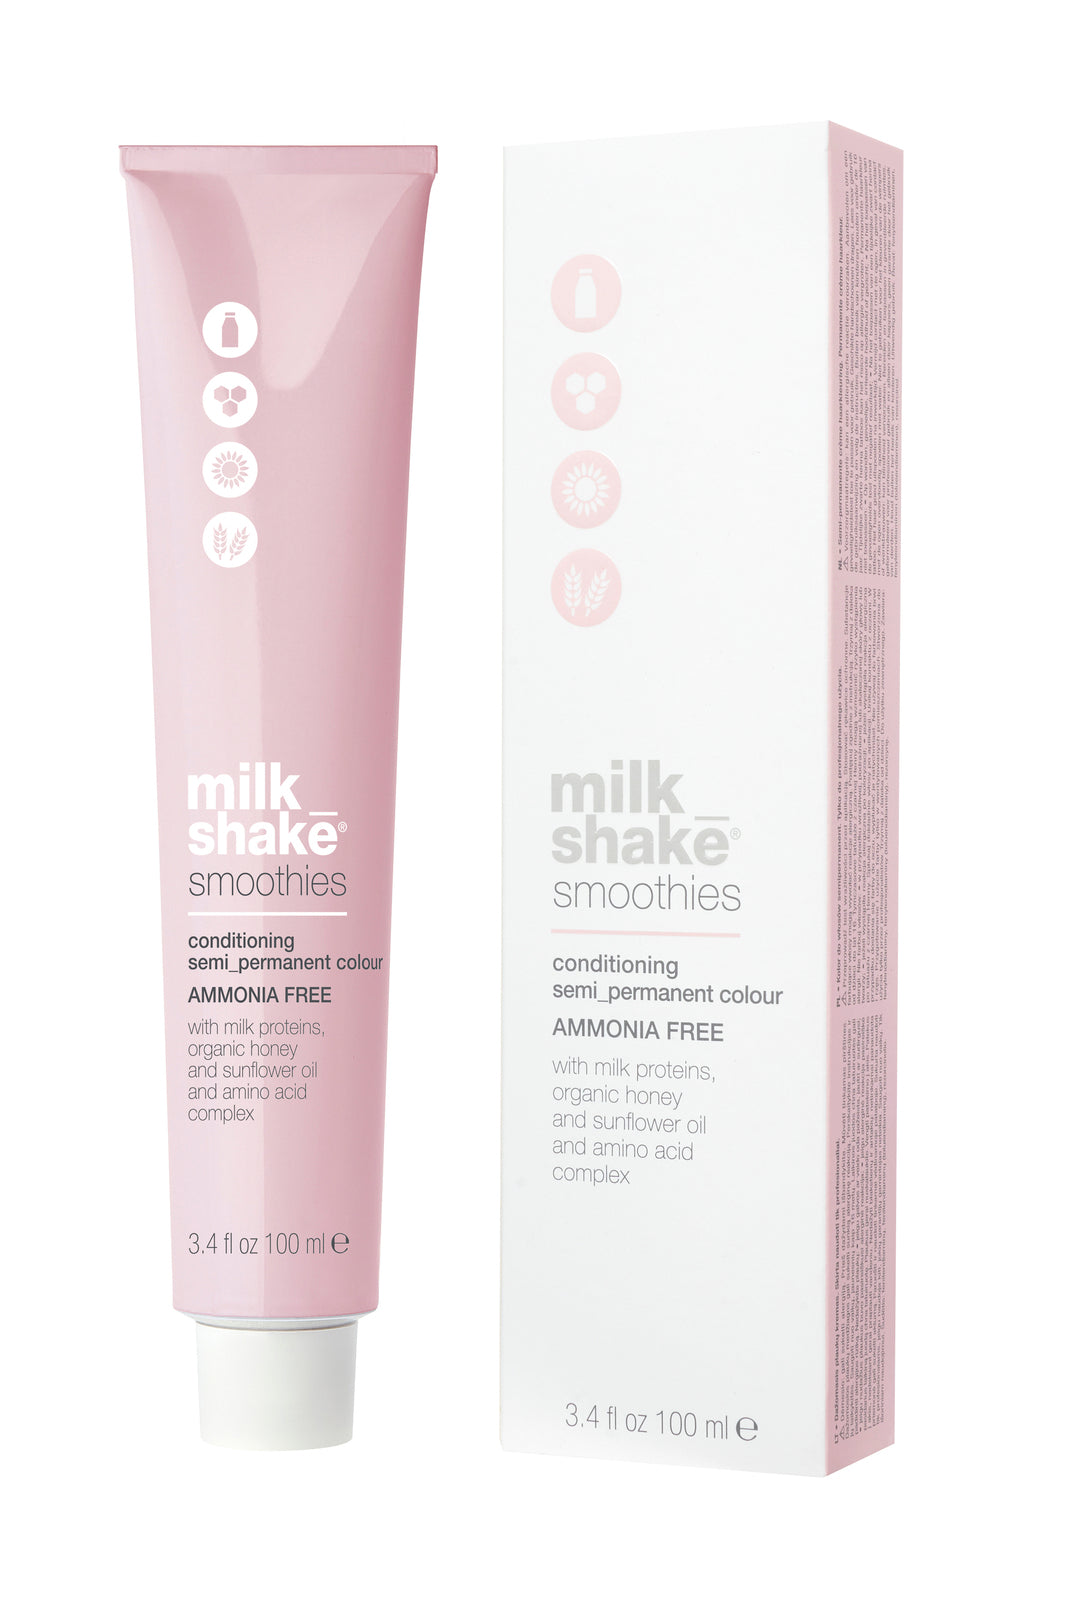 Milkshake smoothies semi-permanent color 7.44